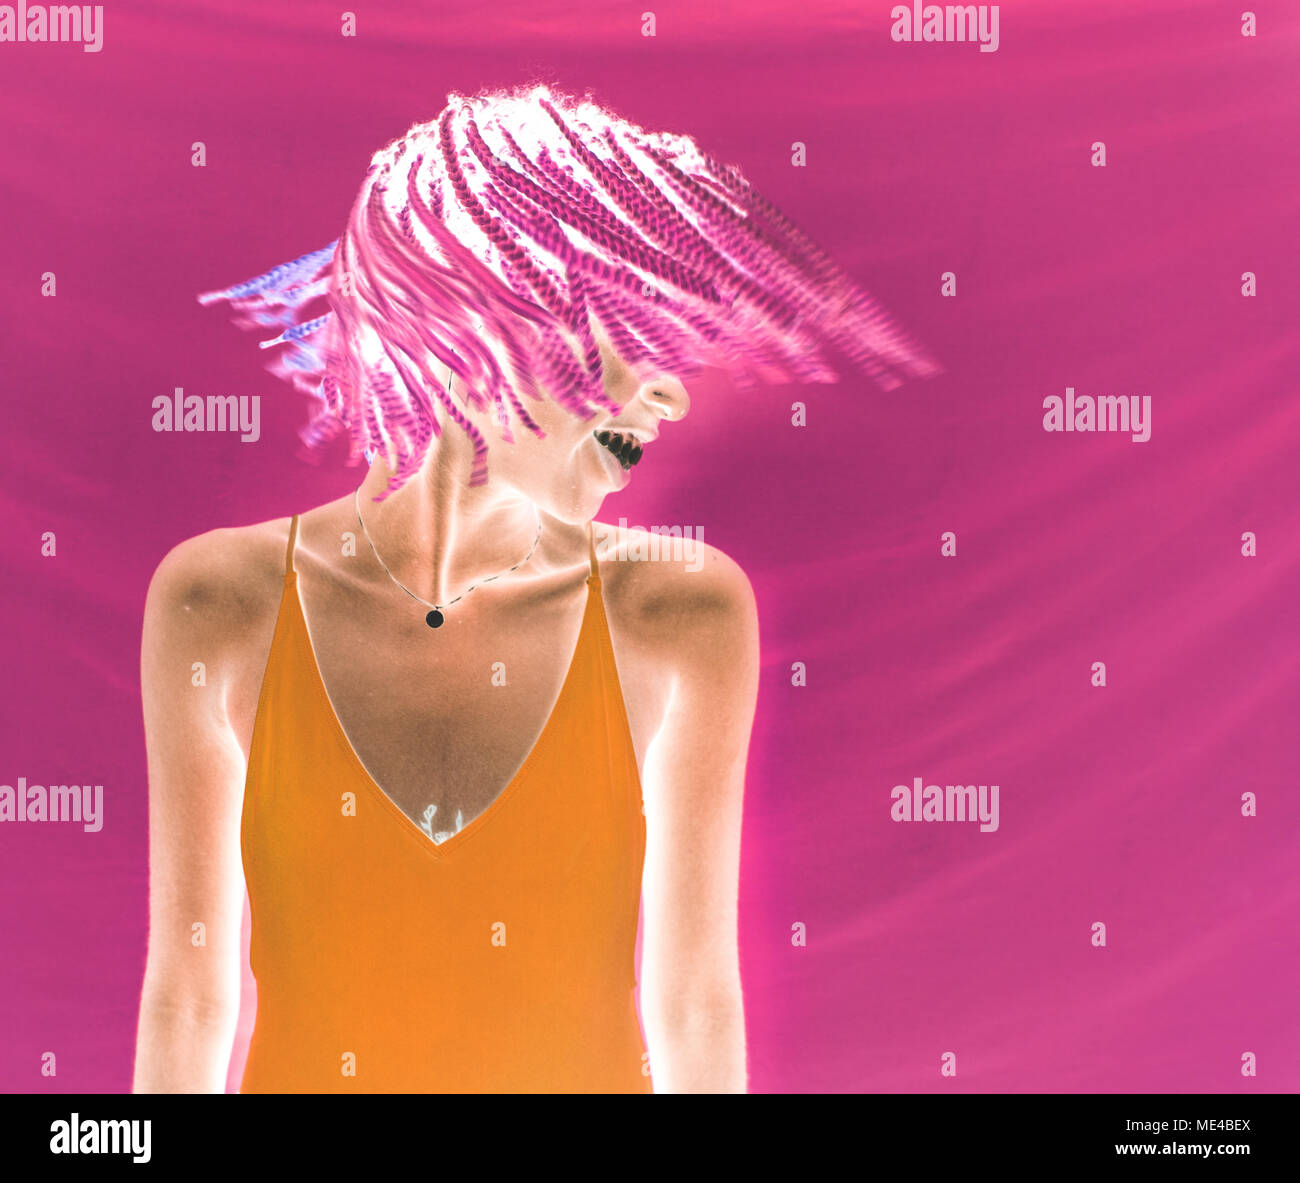 Girl shaking her pink braided hair Stock Photo